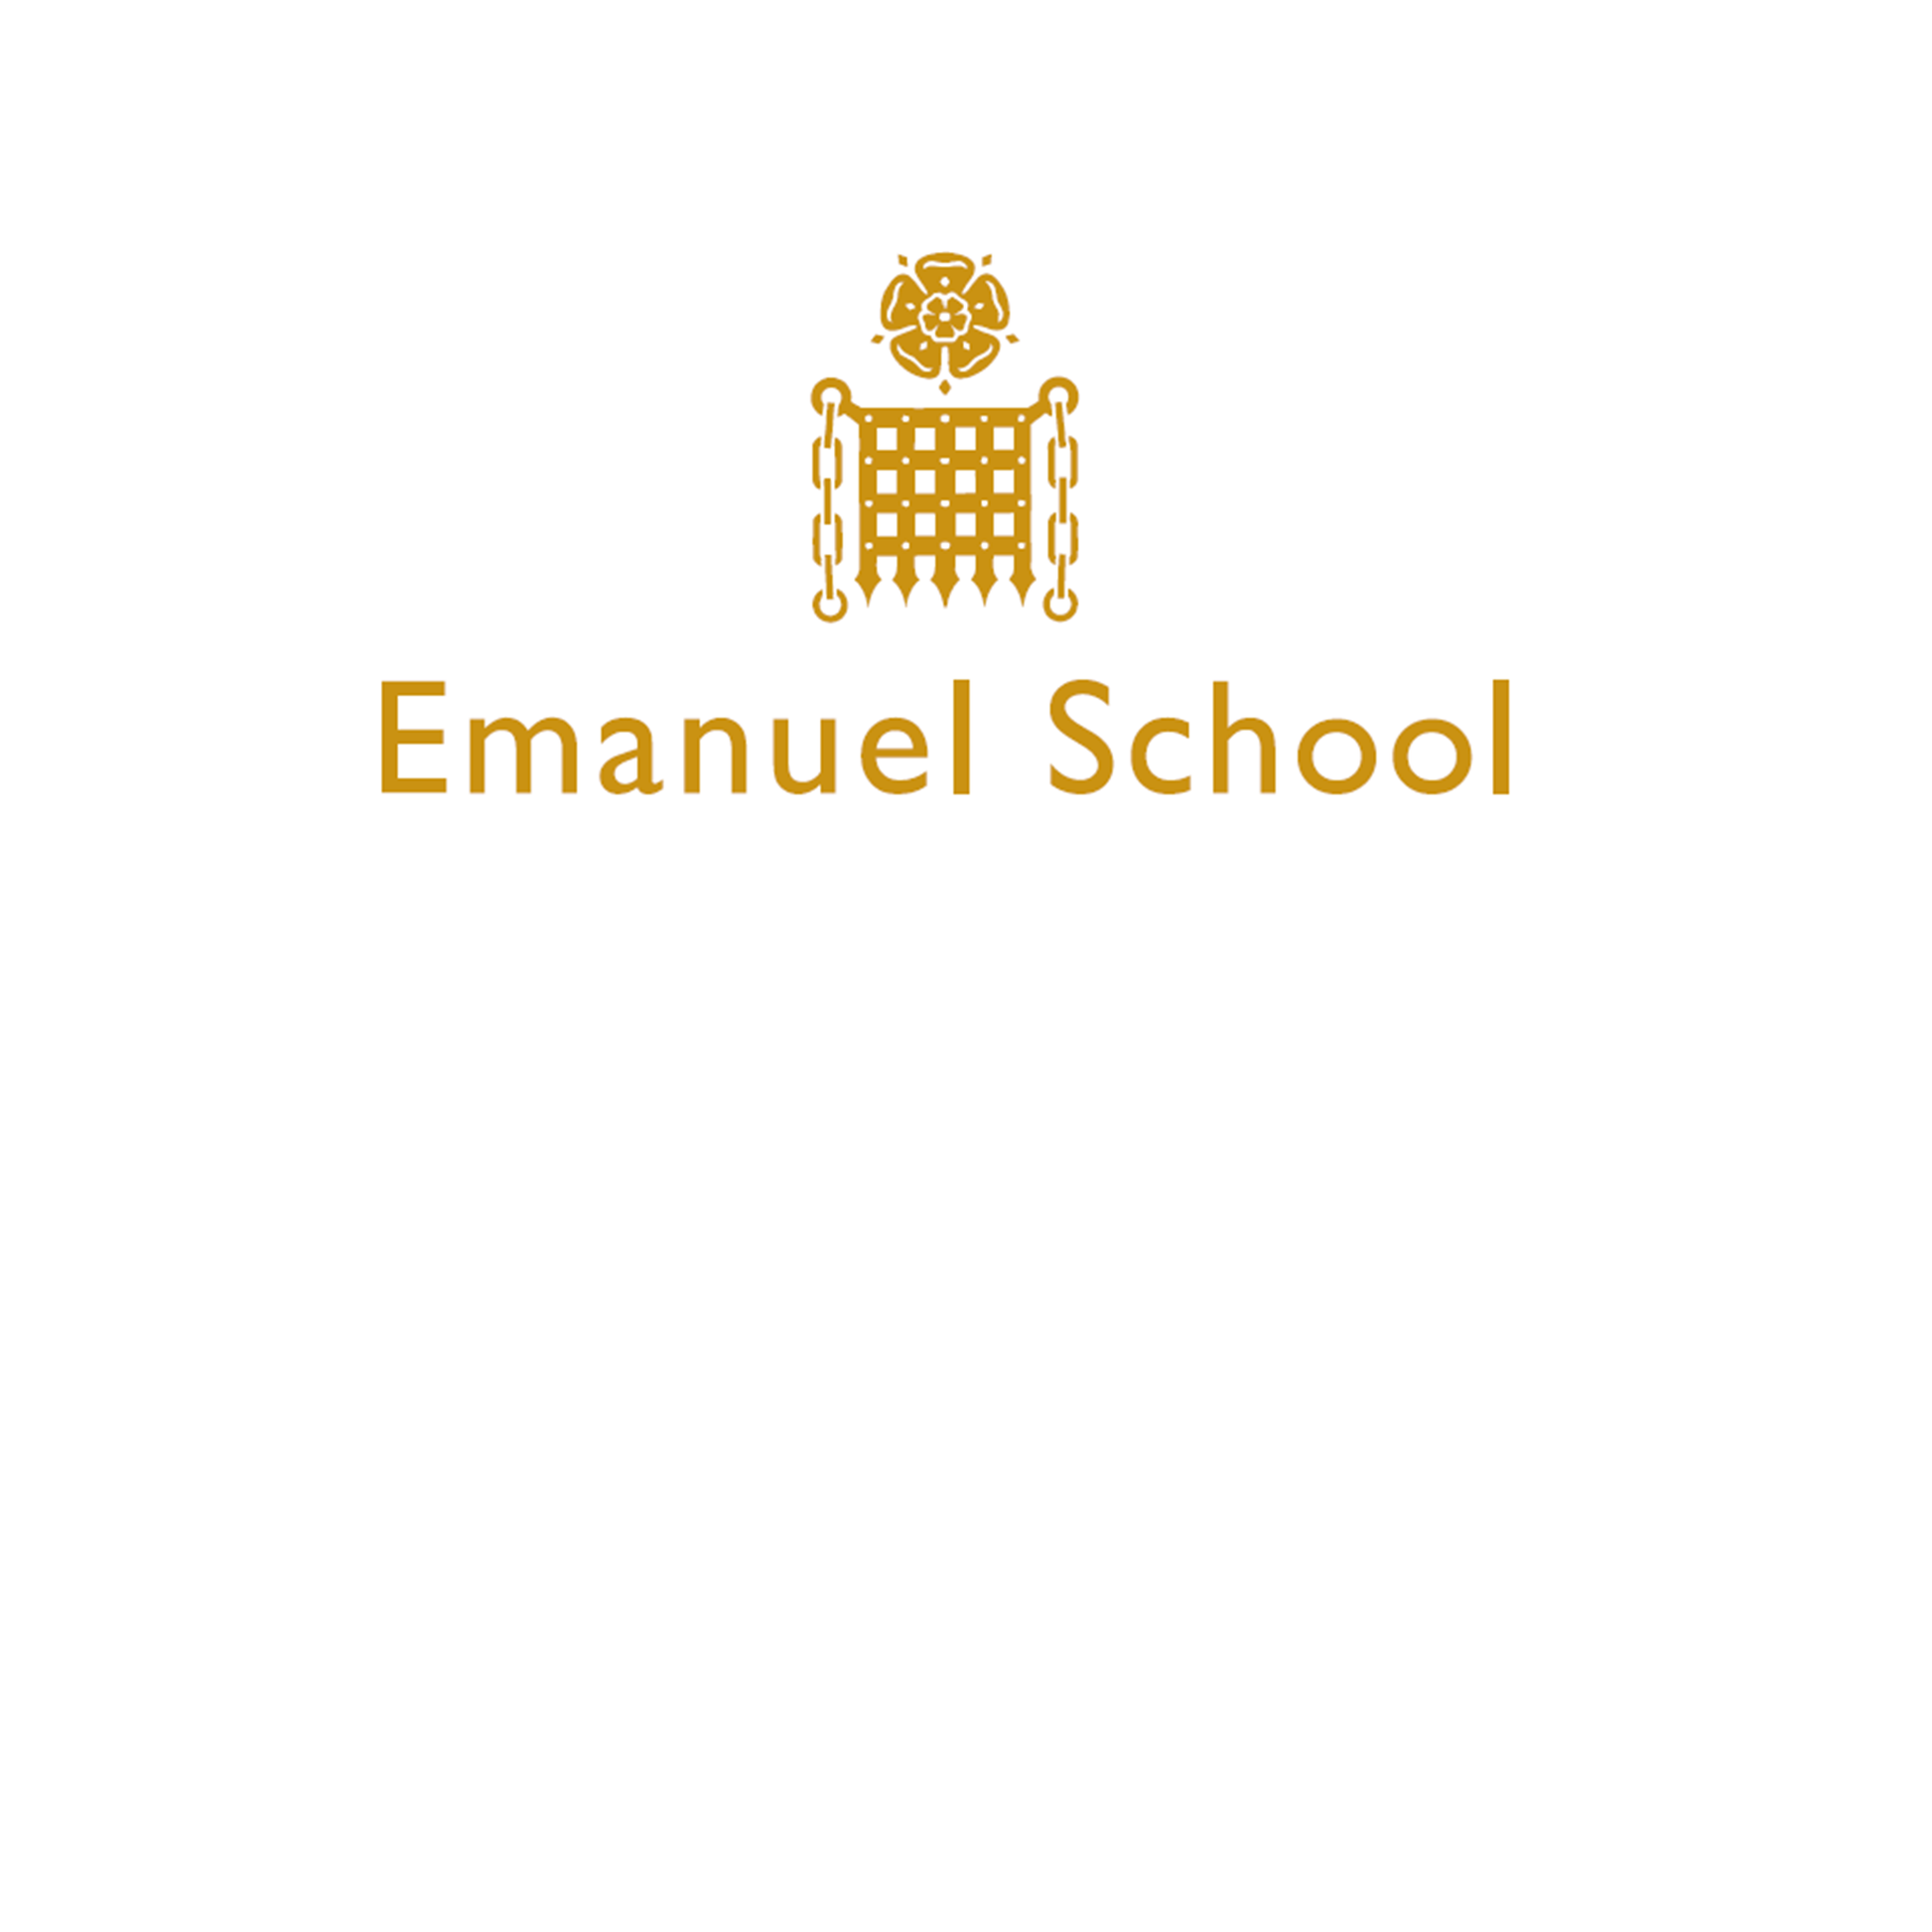 Emanuel School: 11+ English (2010) 